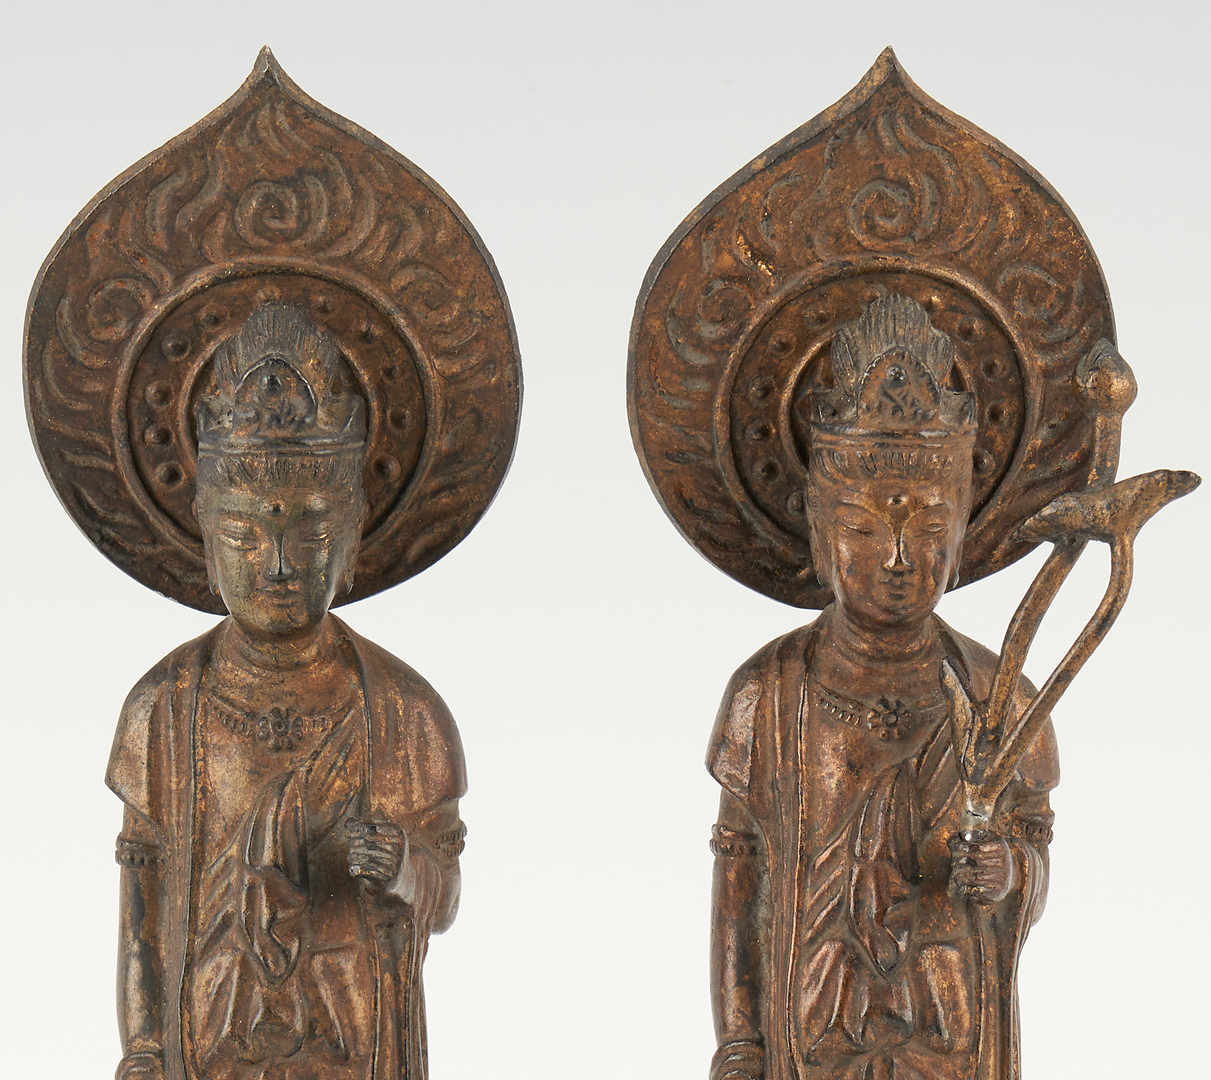 Lot 14: Pair of Asian Bronze Models of Guanyin